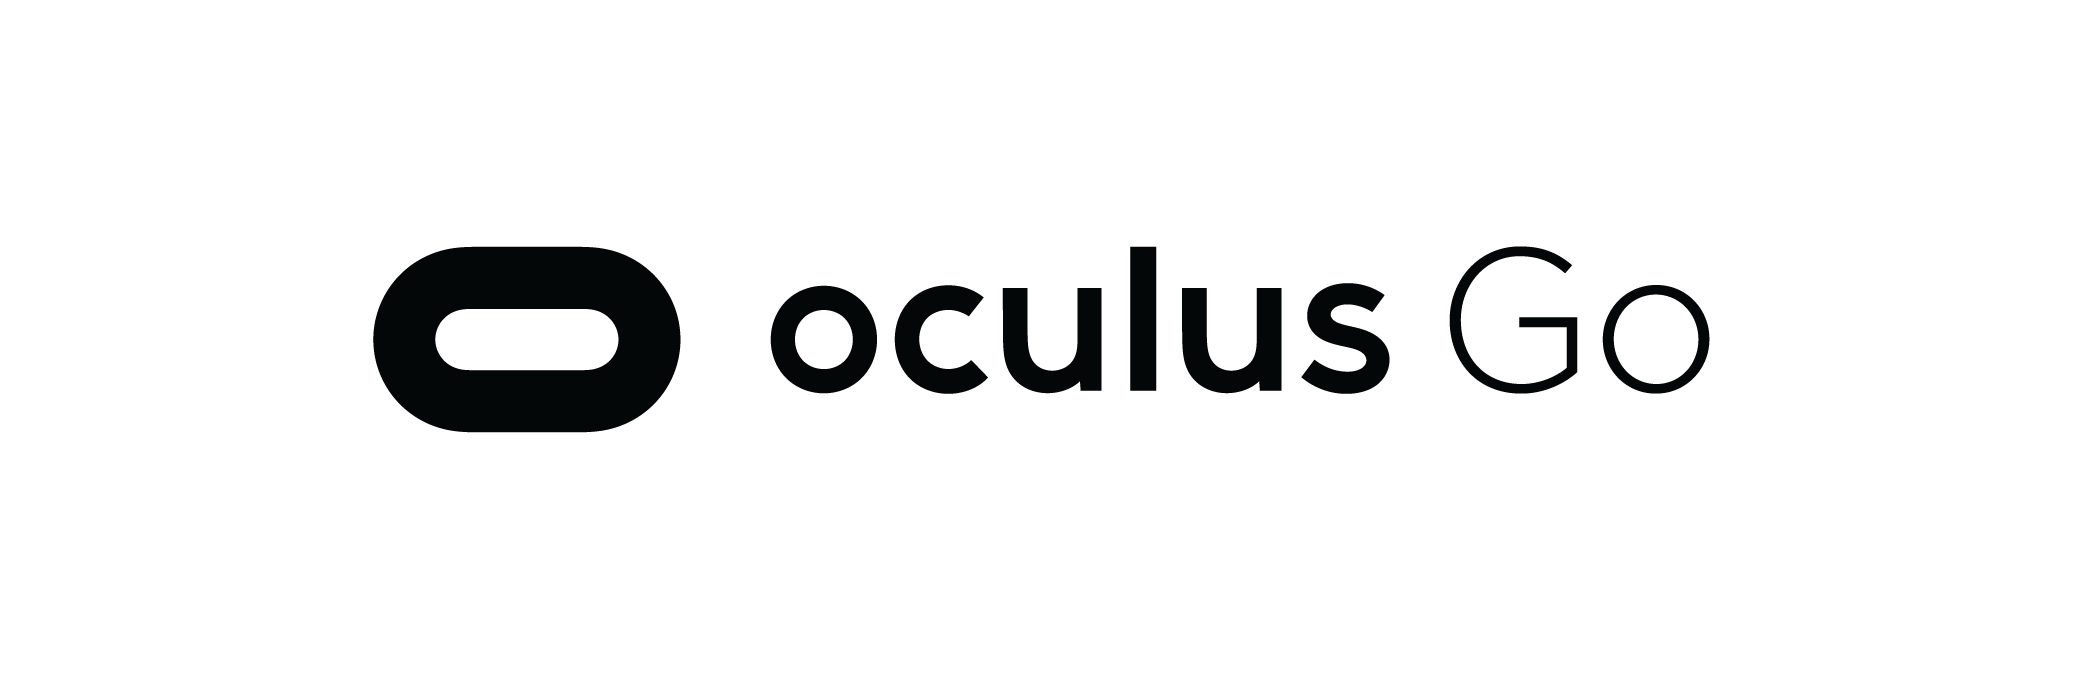 Oculus go logo black